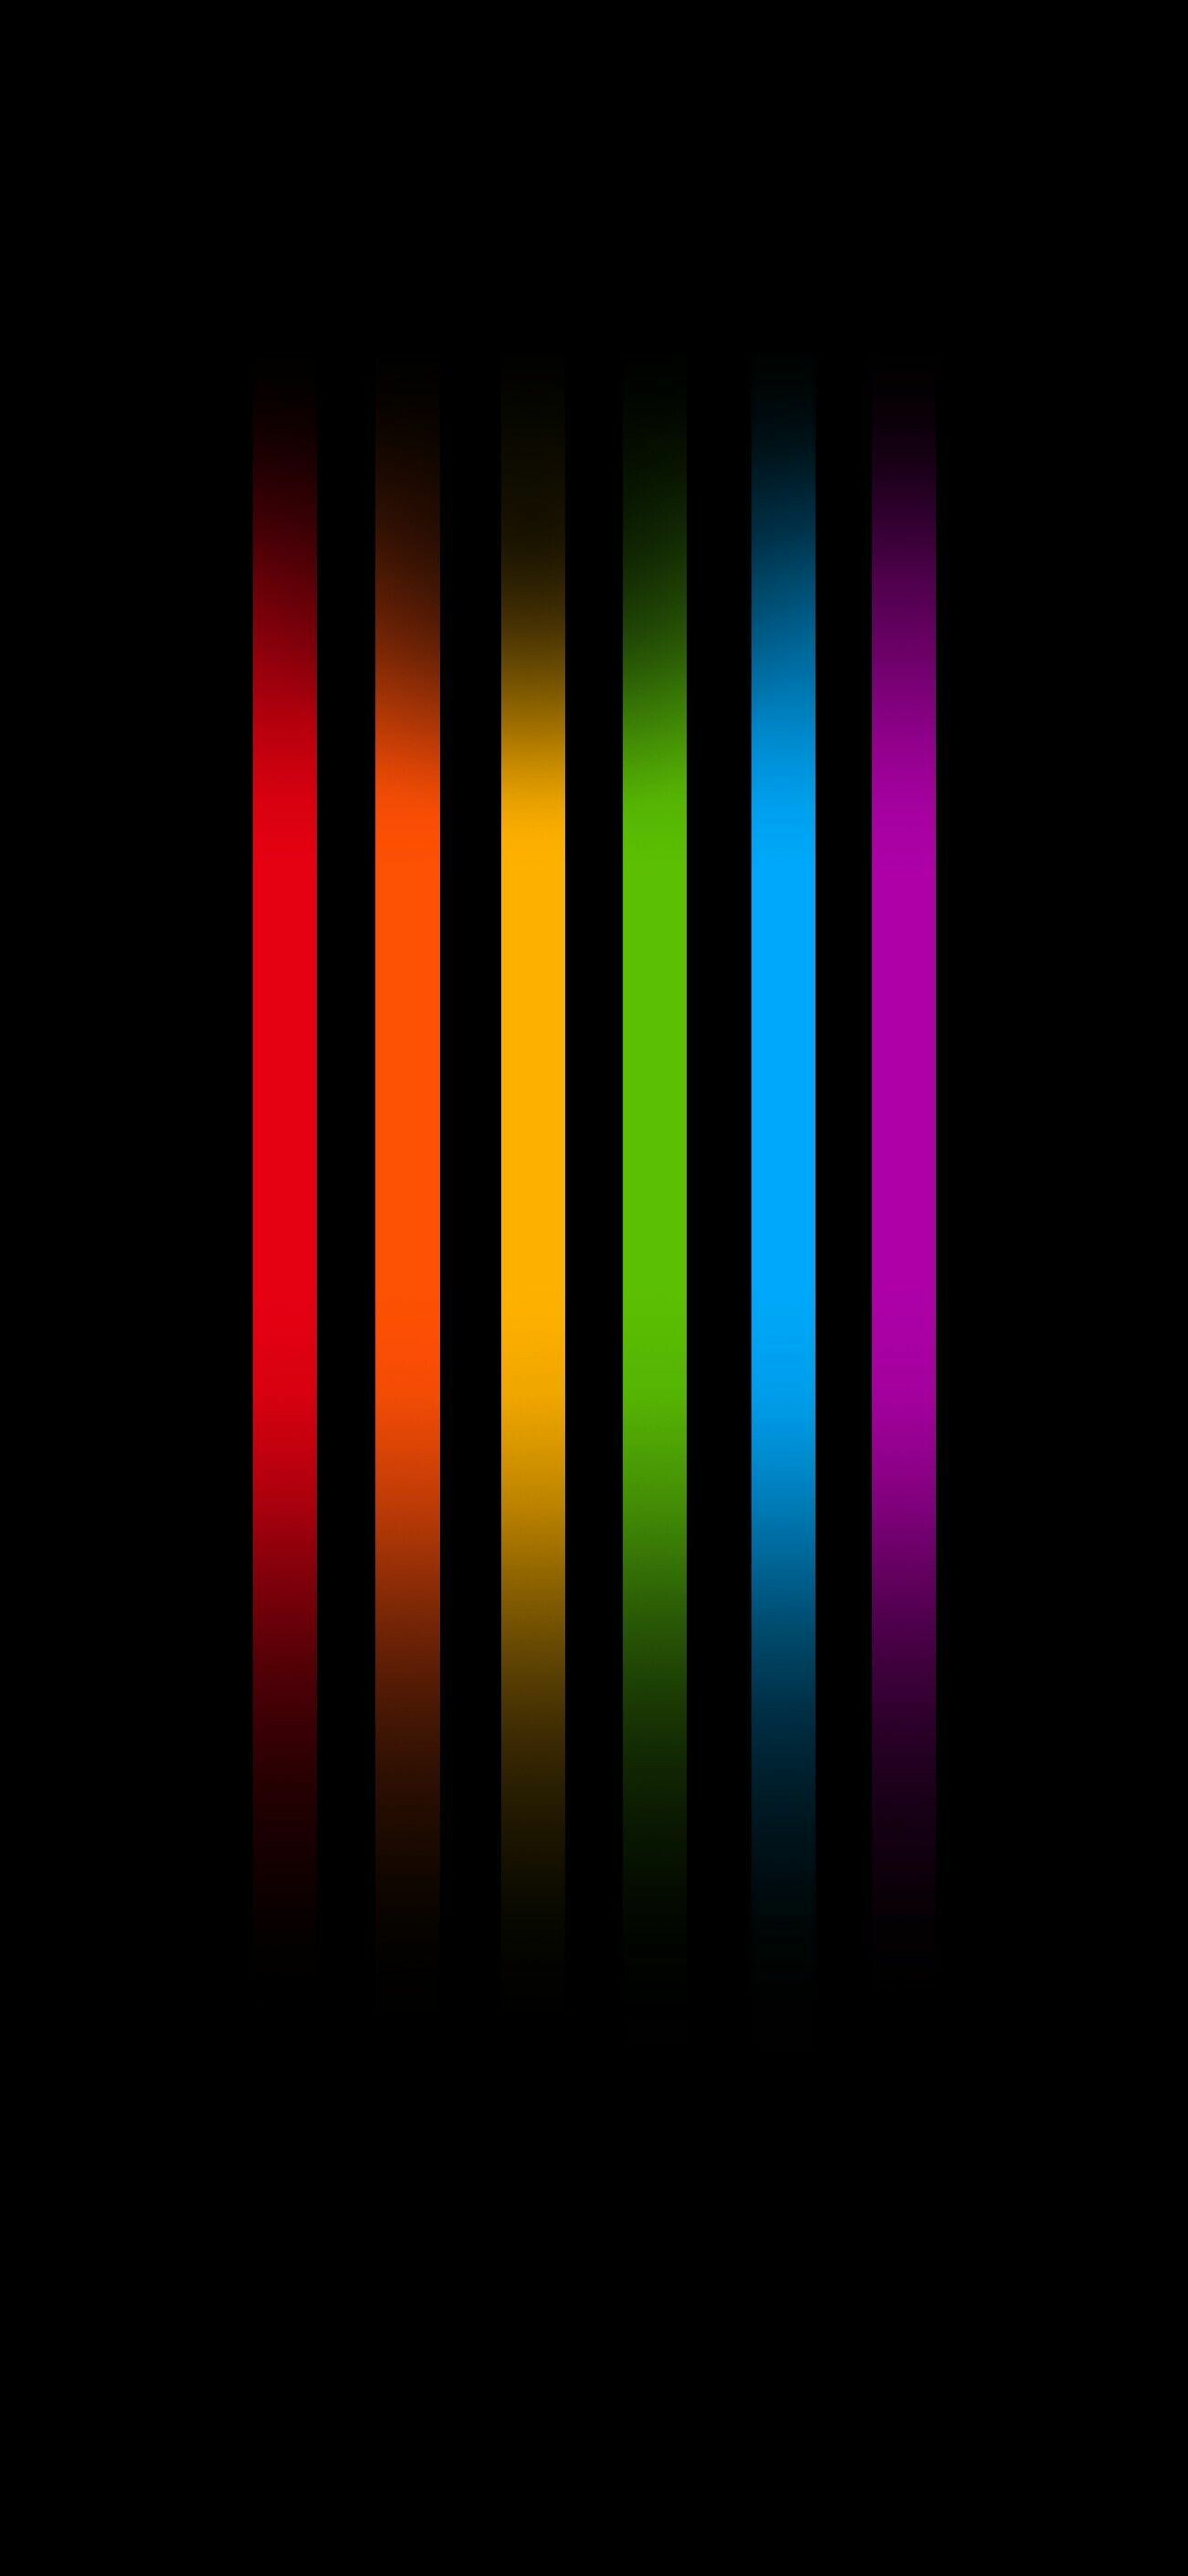 Rainbow Colors: Minimalism, Geometric designs, Parallel lines. 1310x2820 HD Wallpaper.